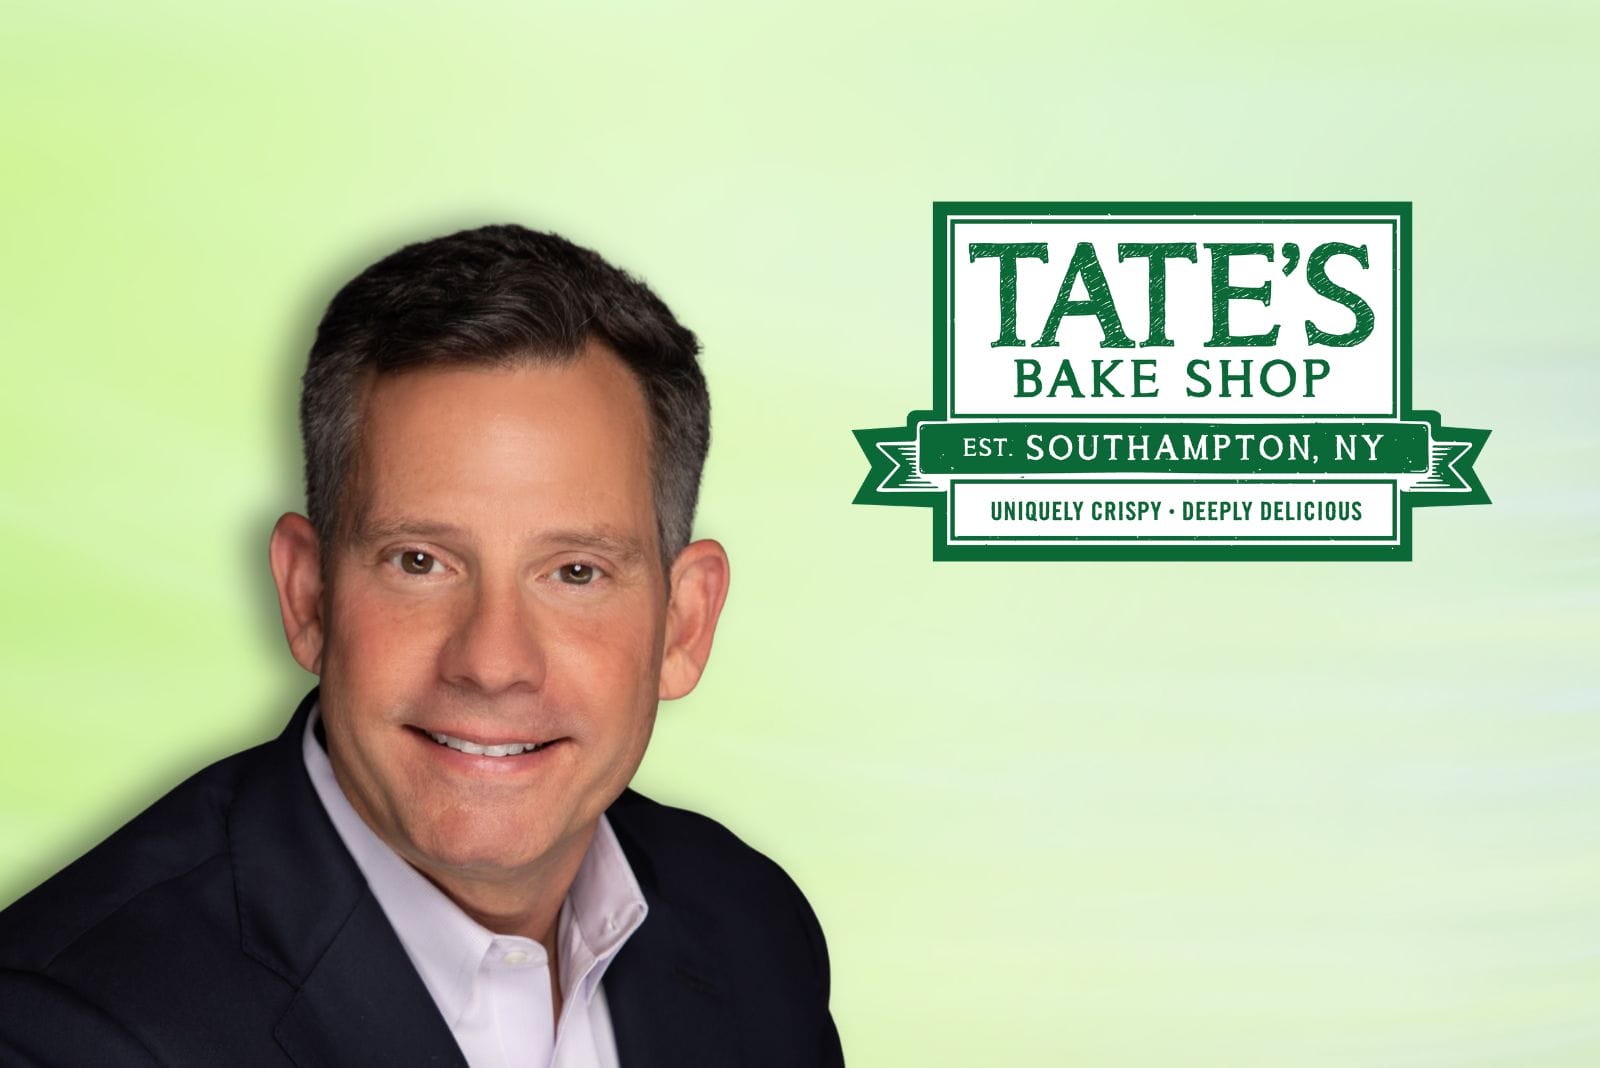 Tate's Bake Shop logo next to executive on green background